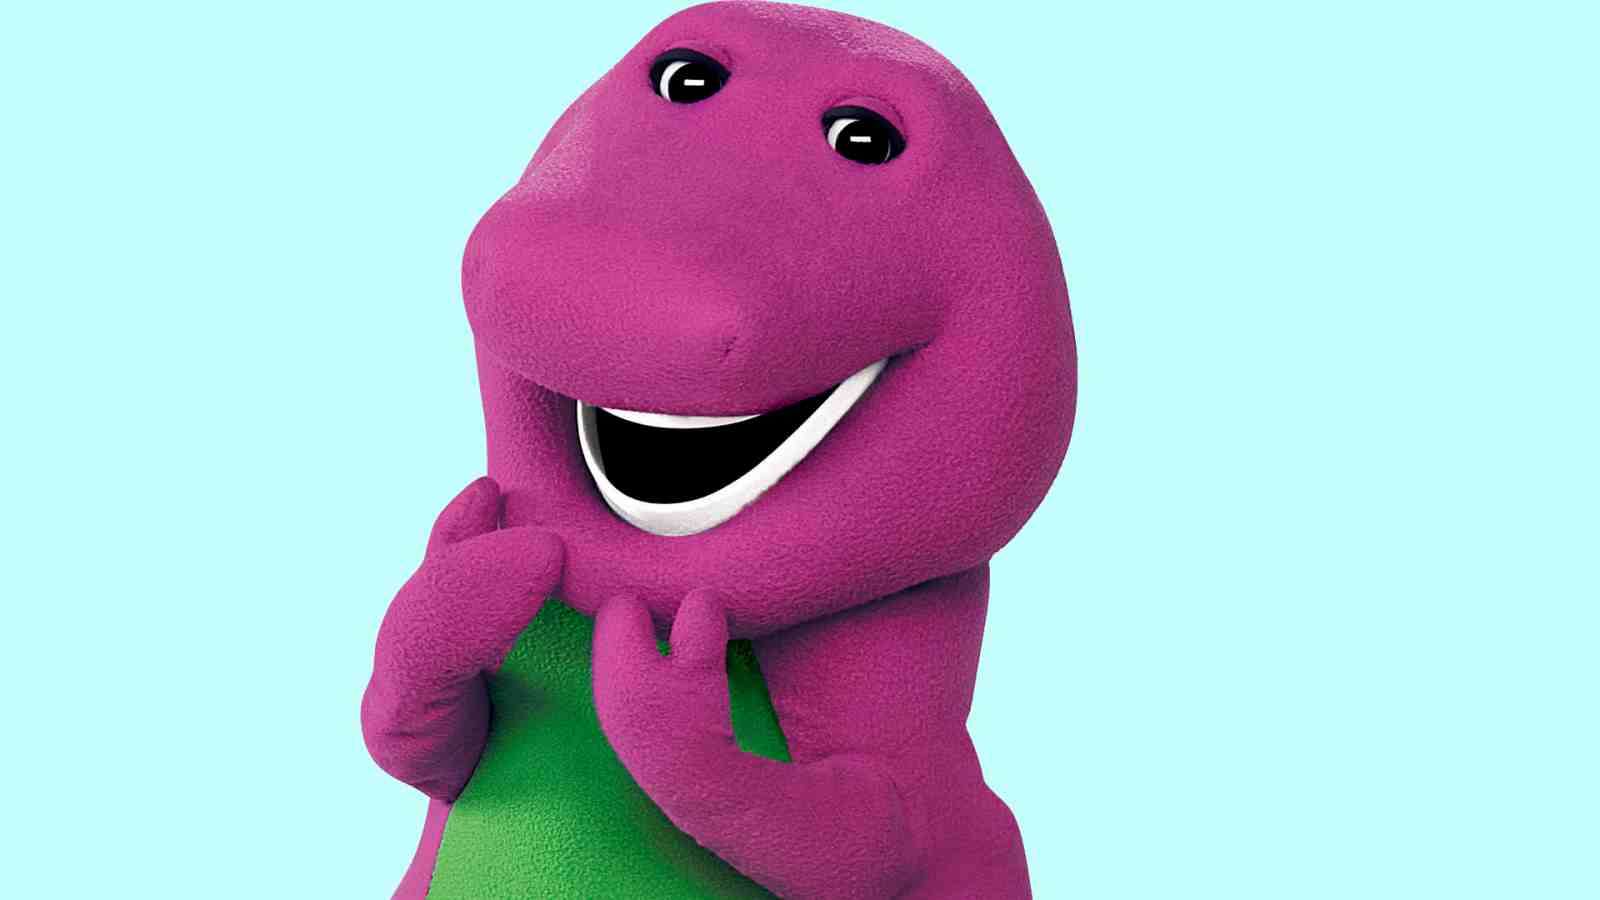 barney the purple dinosaur